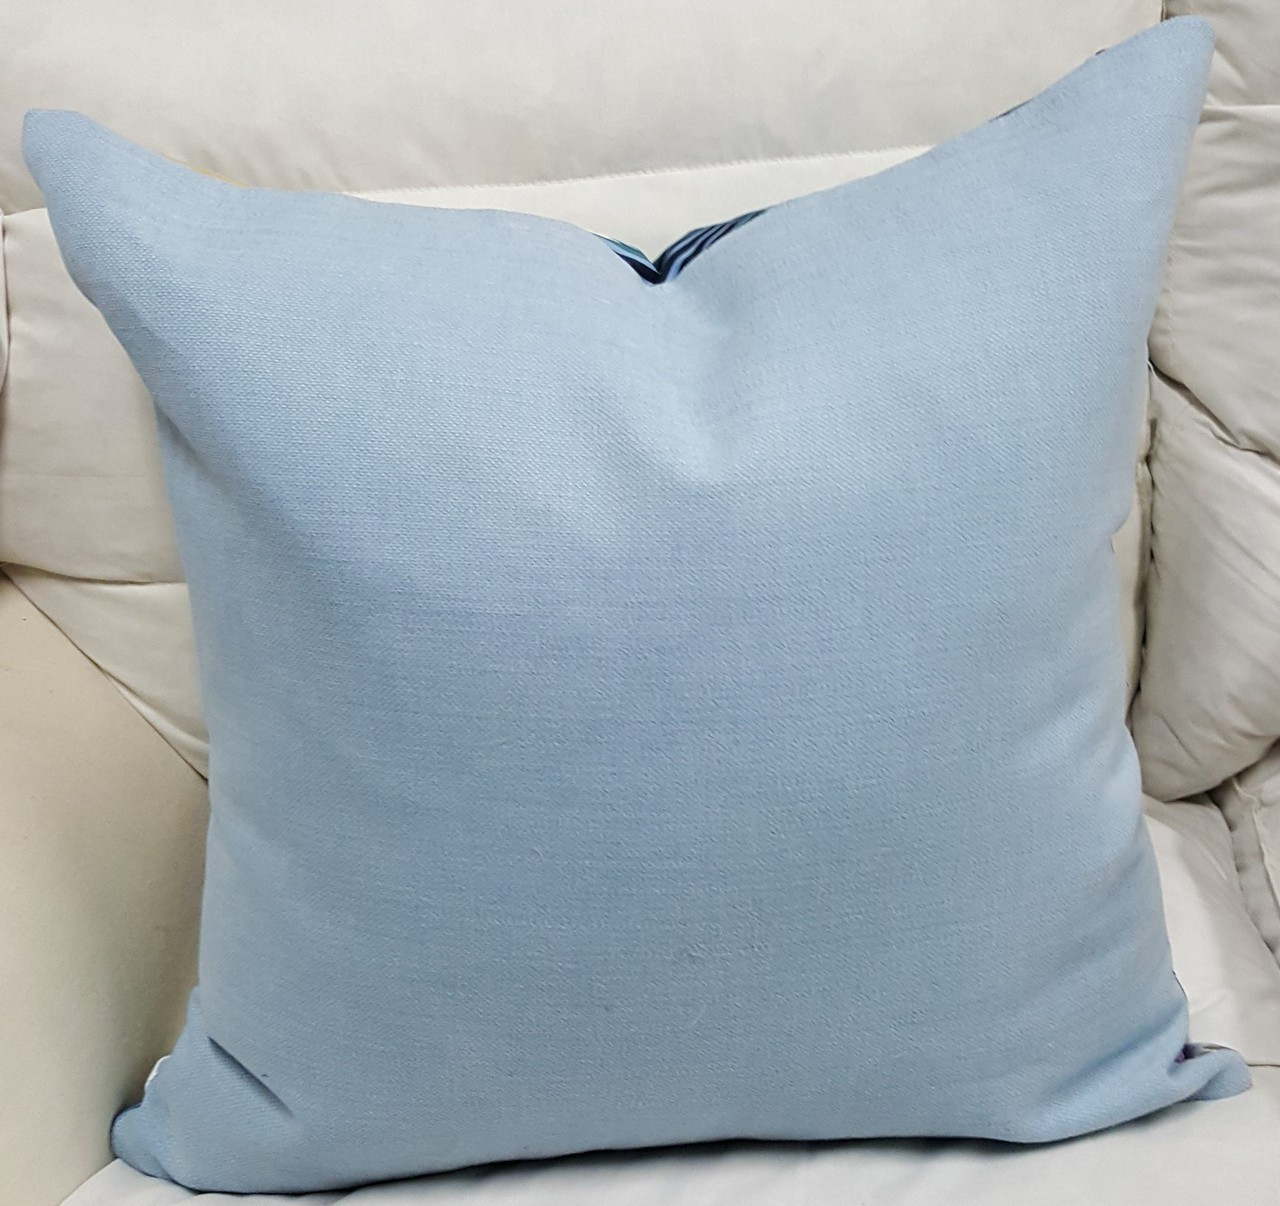 light blue throw pillows - Small Living Room Design Ideas and Color ...